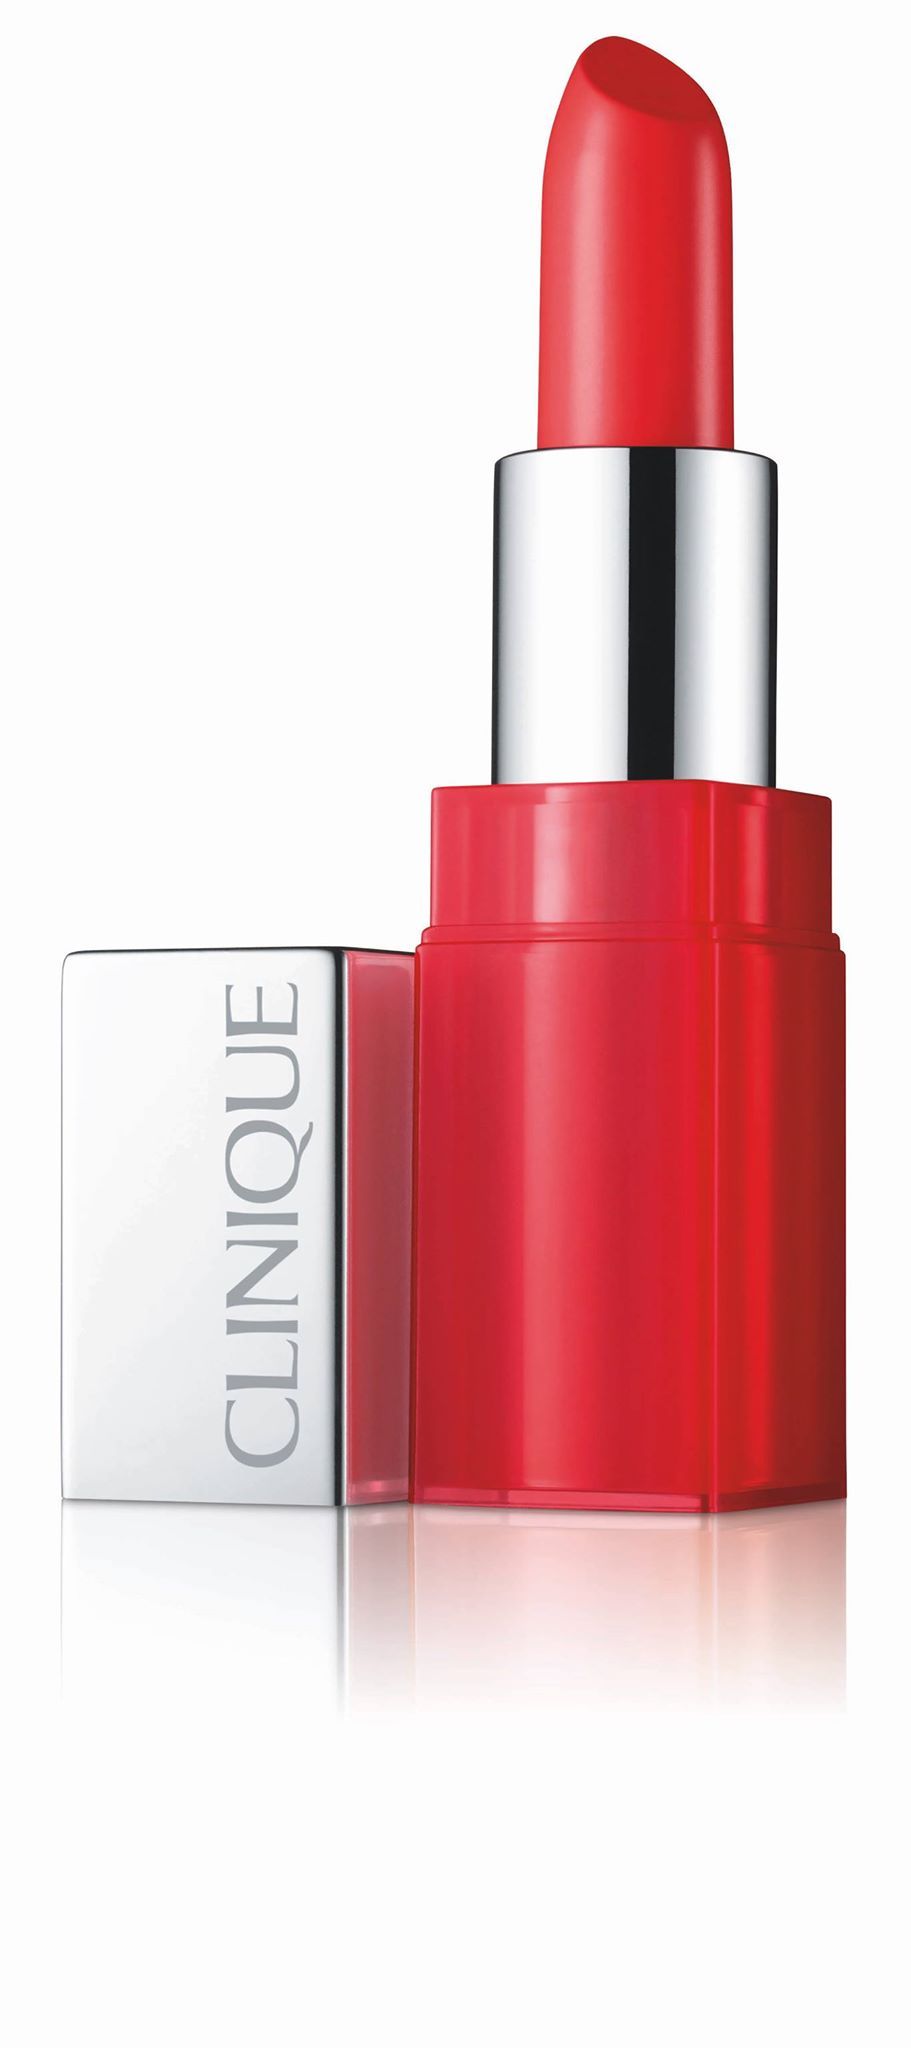 Product, Red, Lipstick, Liquid, Carmine, Maroon, Peach, Parallel, Rectangle, Cosmetics, 